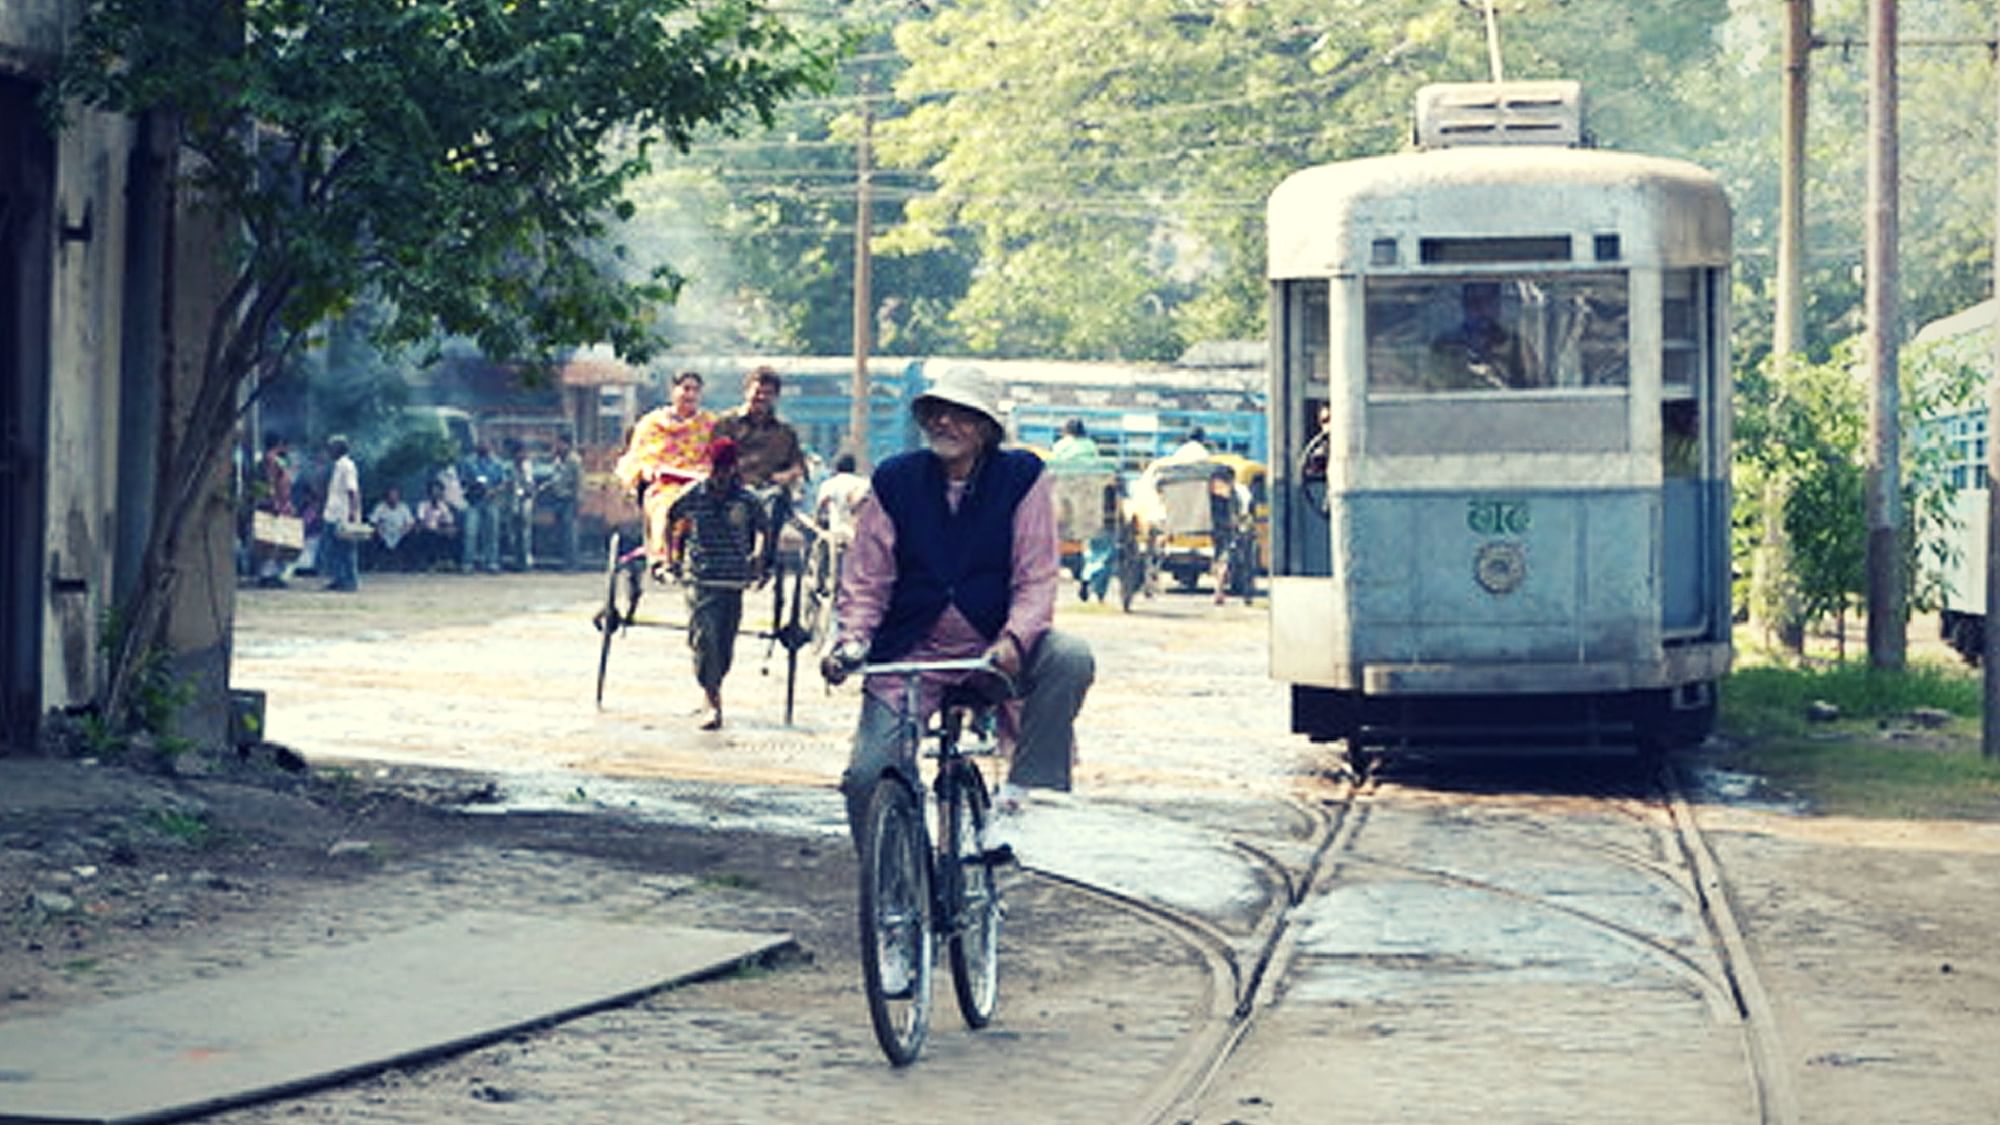 Amitabh Bachchan, during his cycling trip through Kolkata for <i>Piku</i>, crosses a tram – an iconic symbol of the city. (Photo Courtesy: <a href="http://srbachchan.tumblr.com/">srbachchan.tumblr.com</a>)